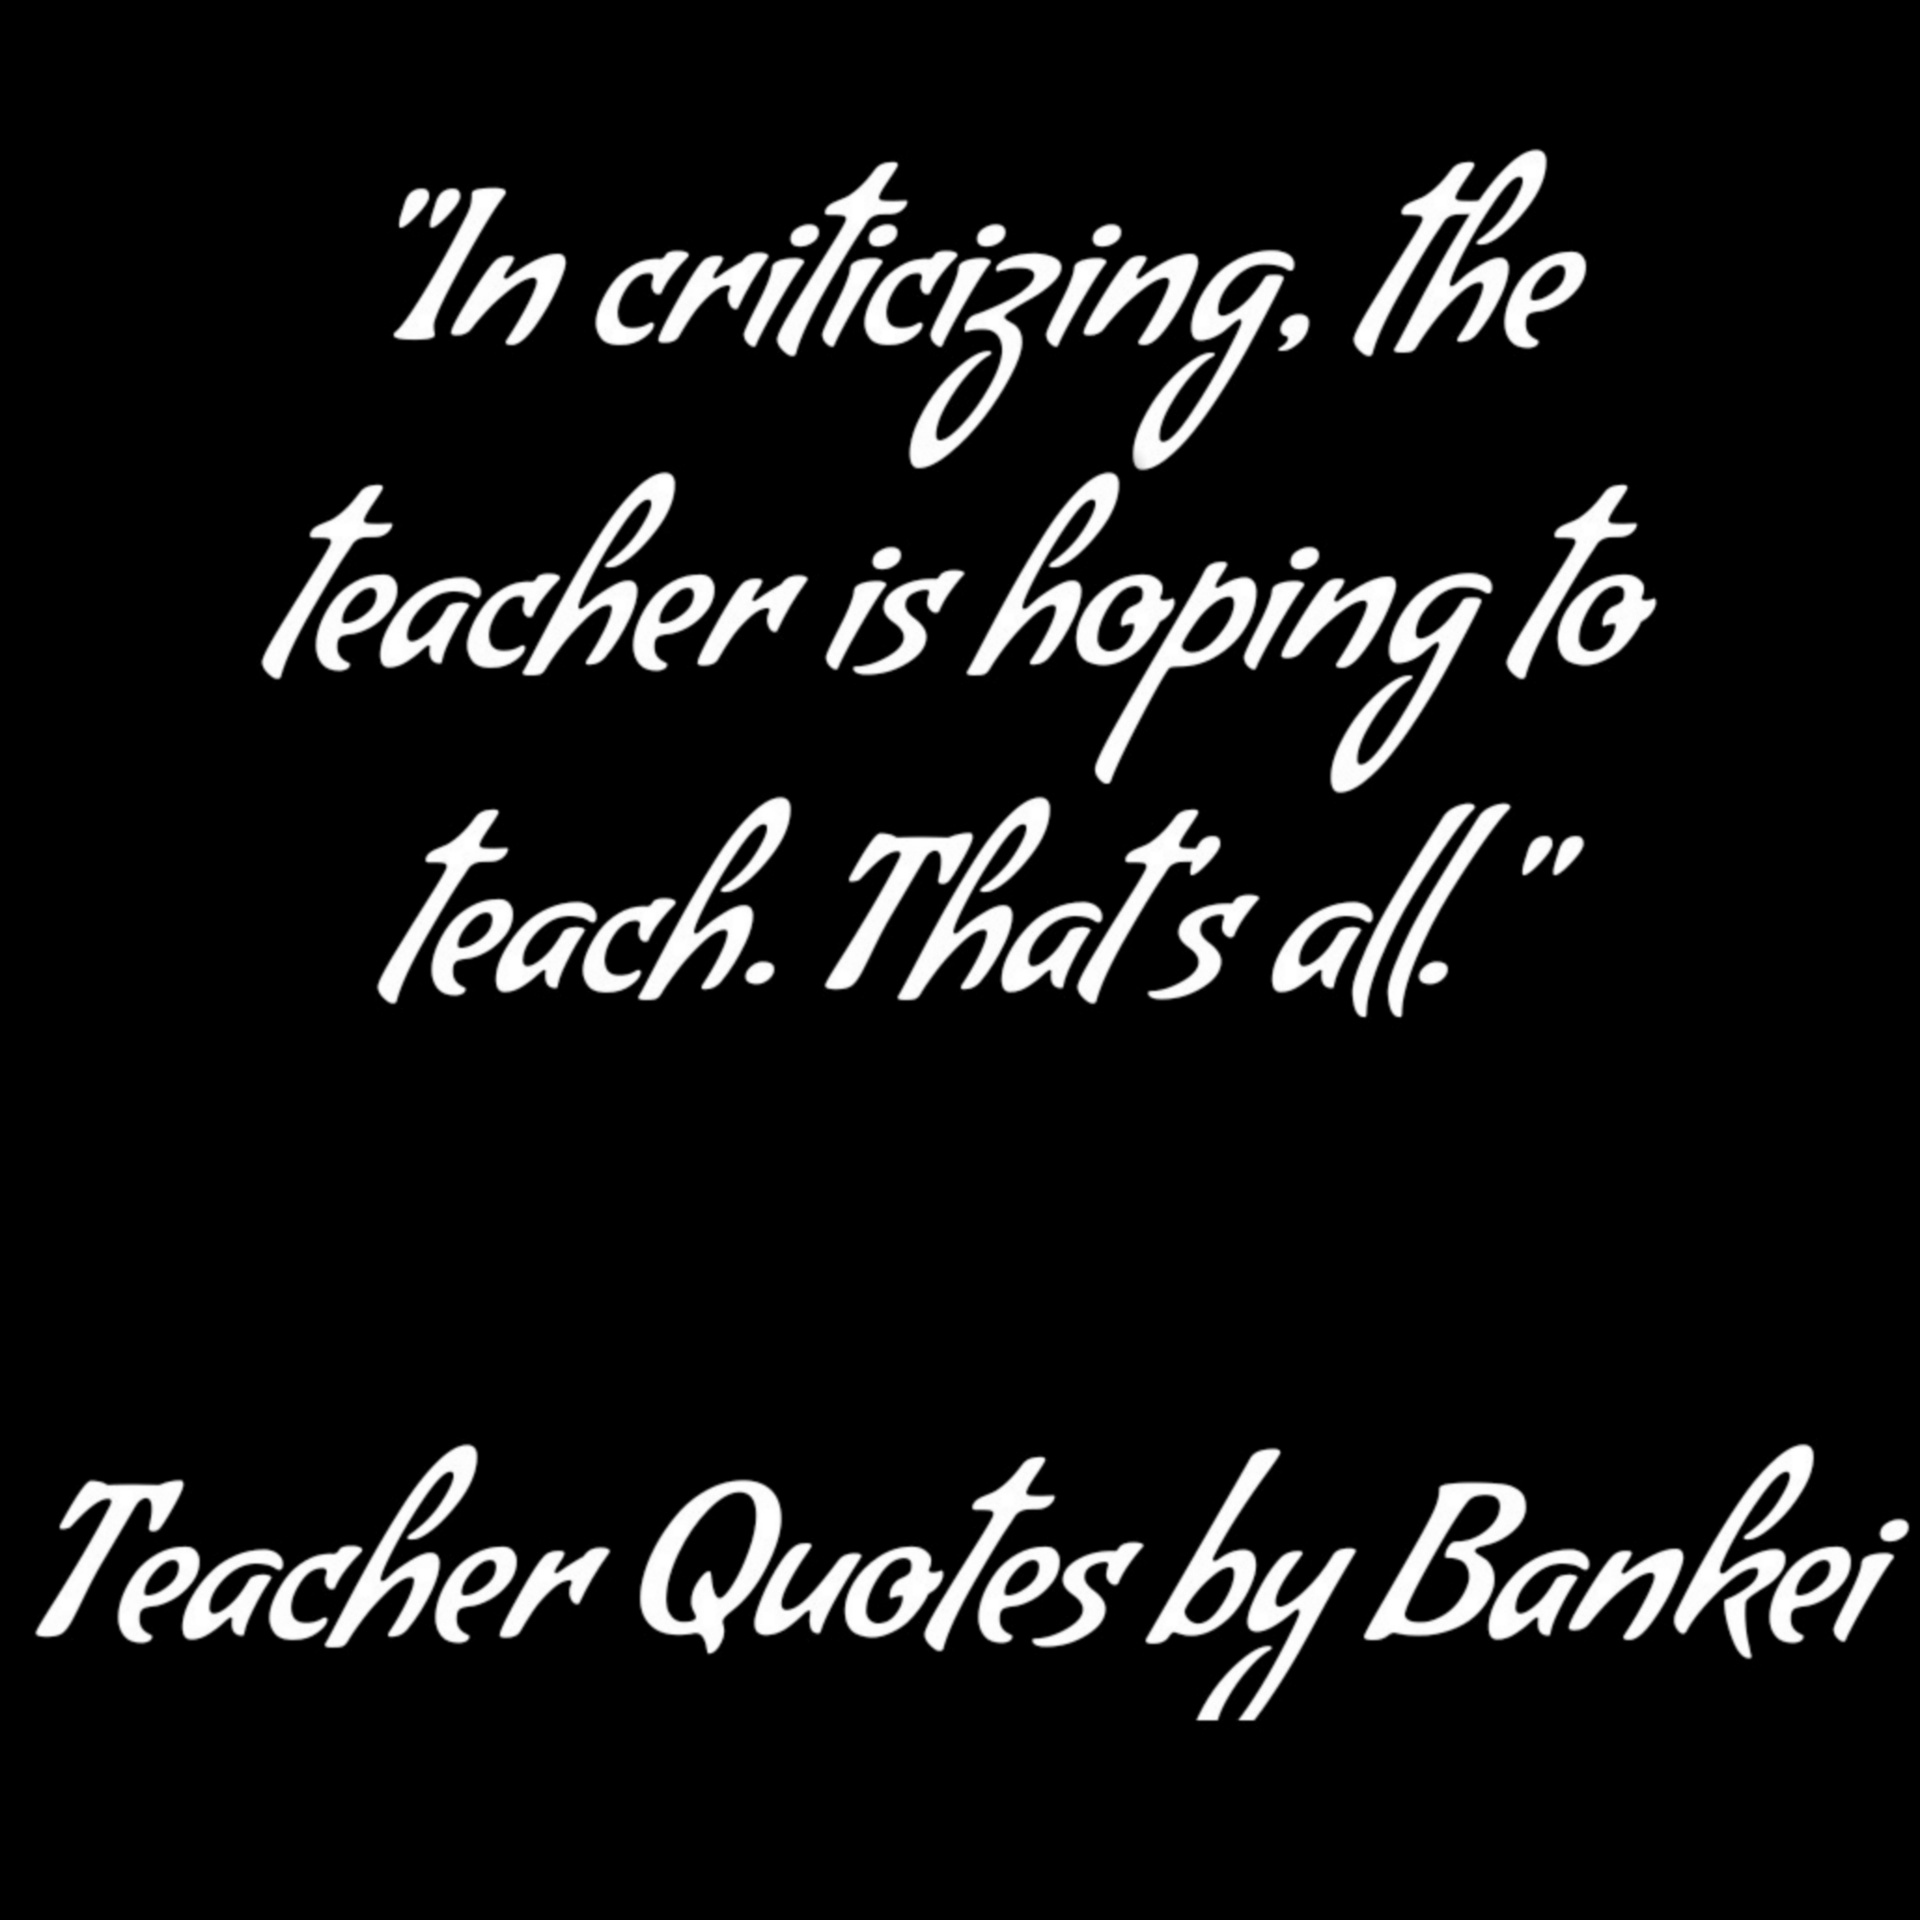 Teacher Quote On Criticizing